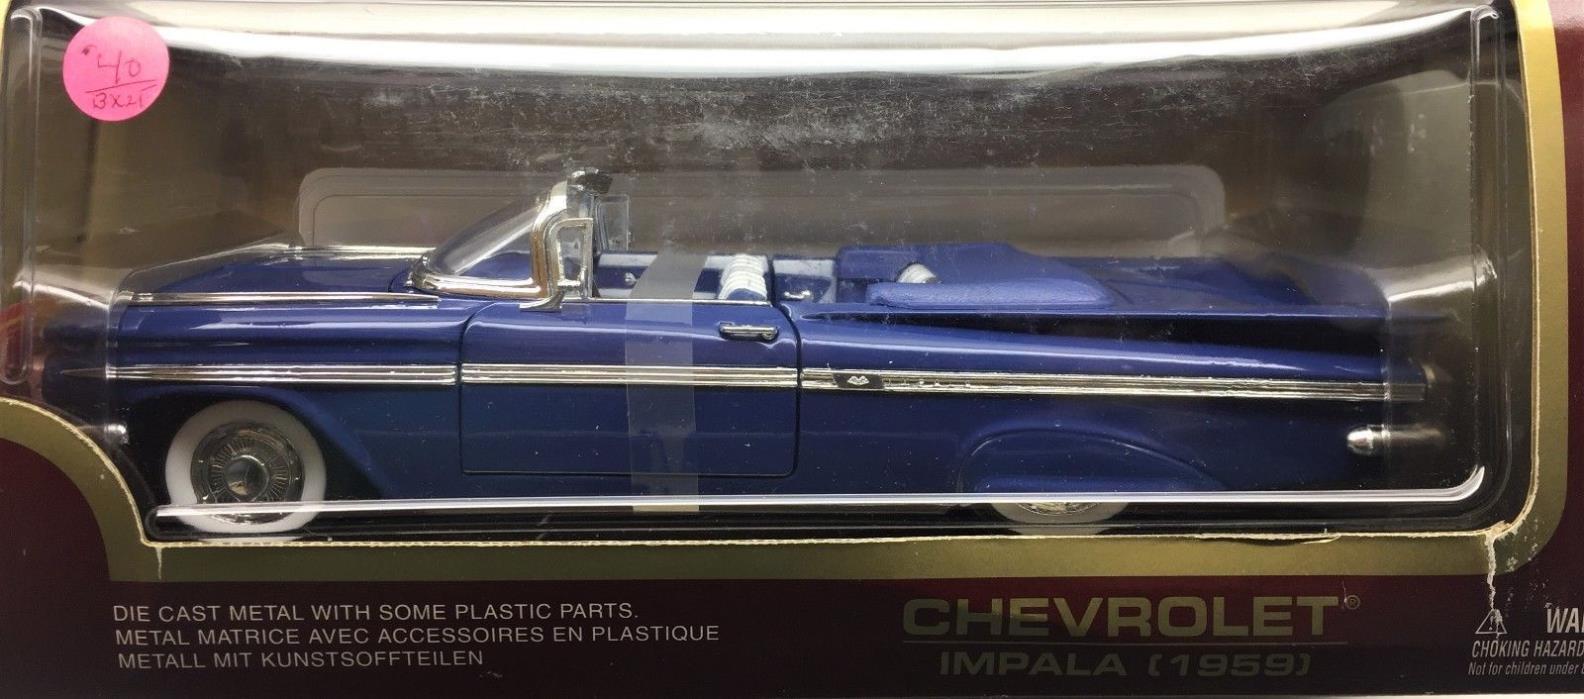 1959 Chevrolet Impala Convertible 